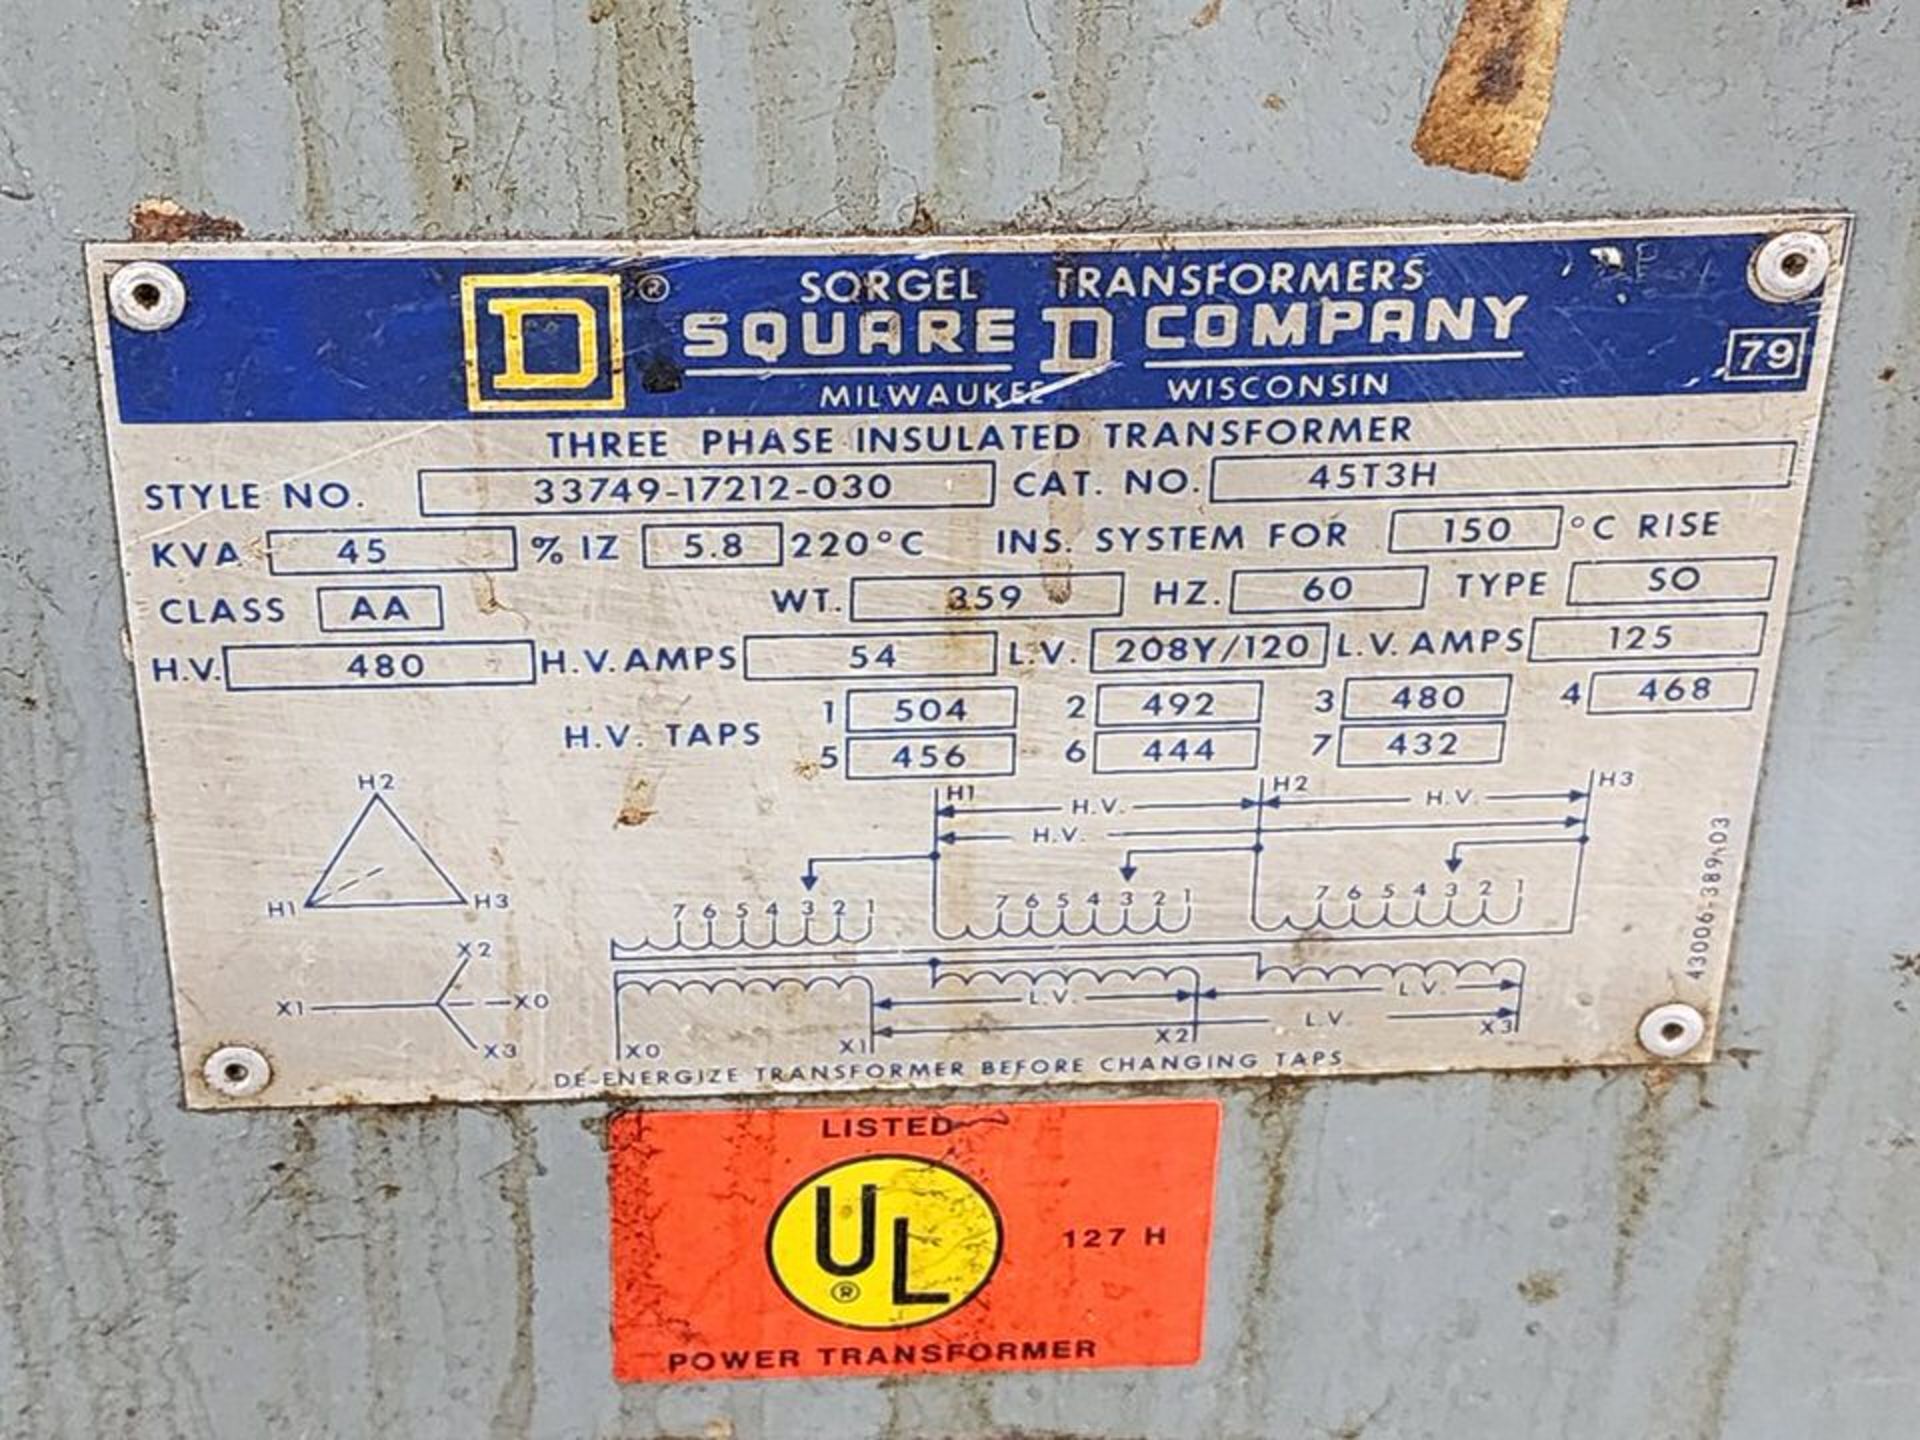 Square D Transformer 45KVA, 3PH, 480H.V. 208Y/120 L.V., 60HZ, 125A - Image 4 of 4